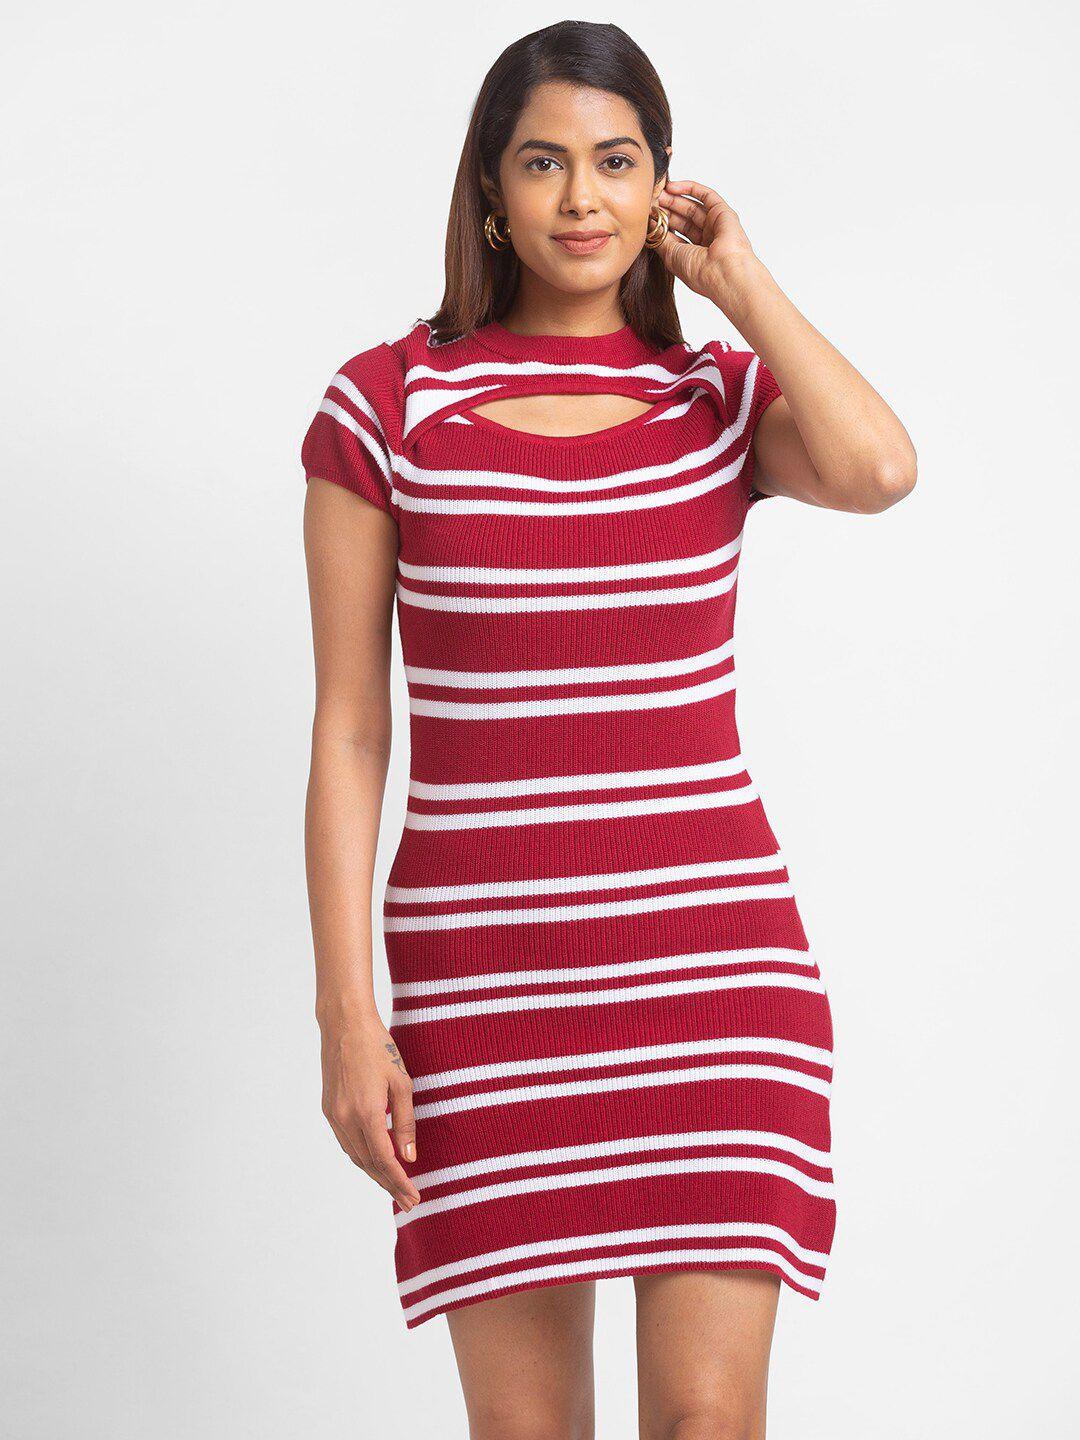 globus red & white striped t-shirt dress